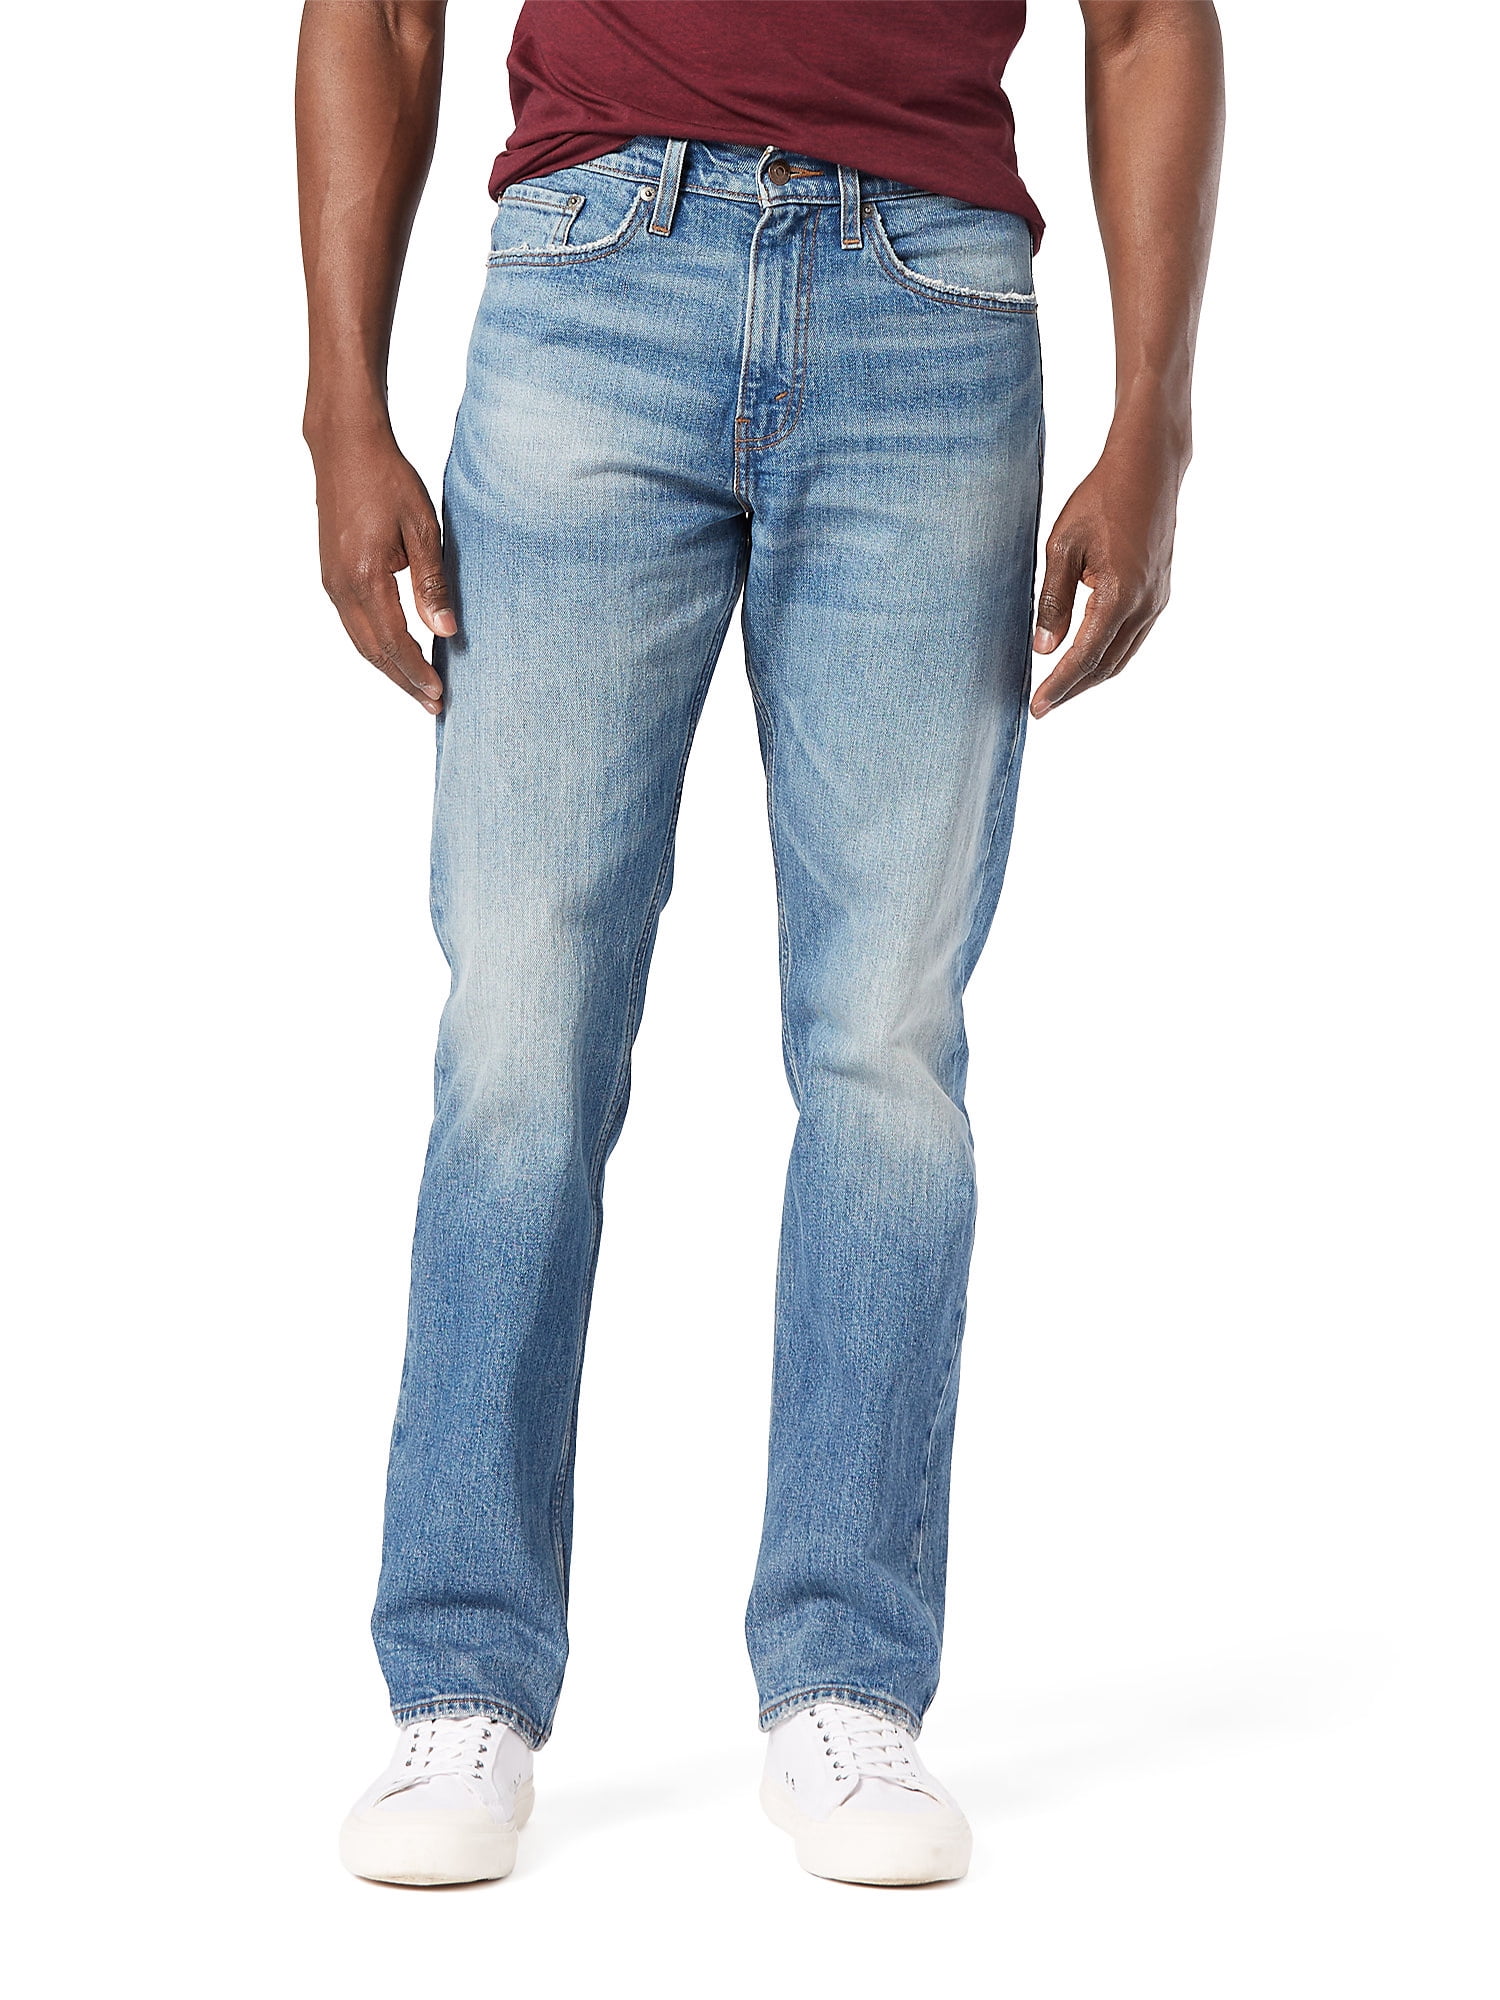 Signature Levi Strauss & Co. Men's Authentic Straight Fit Jeans - Walmart.com